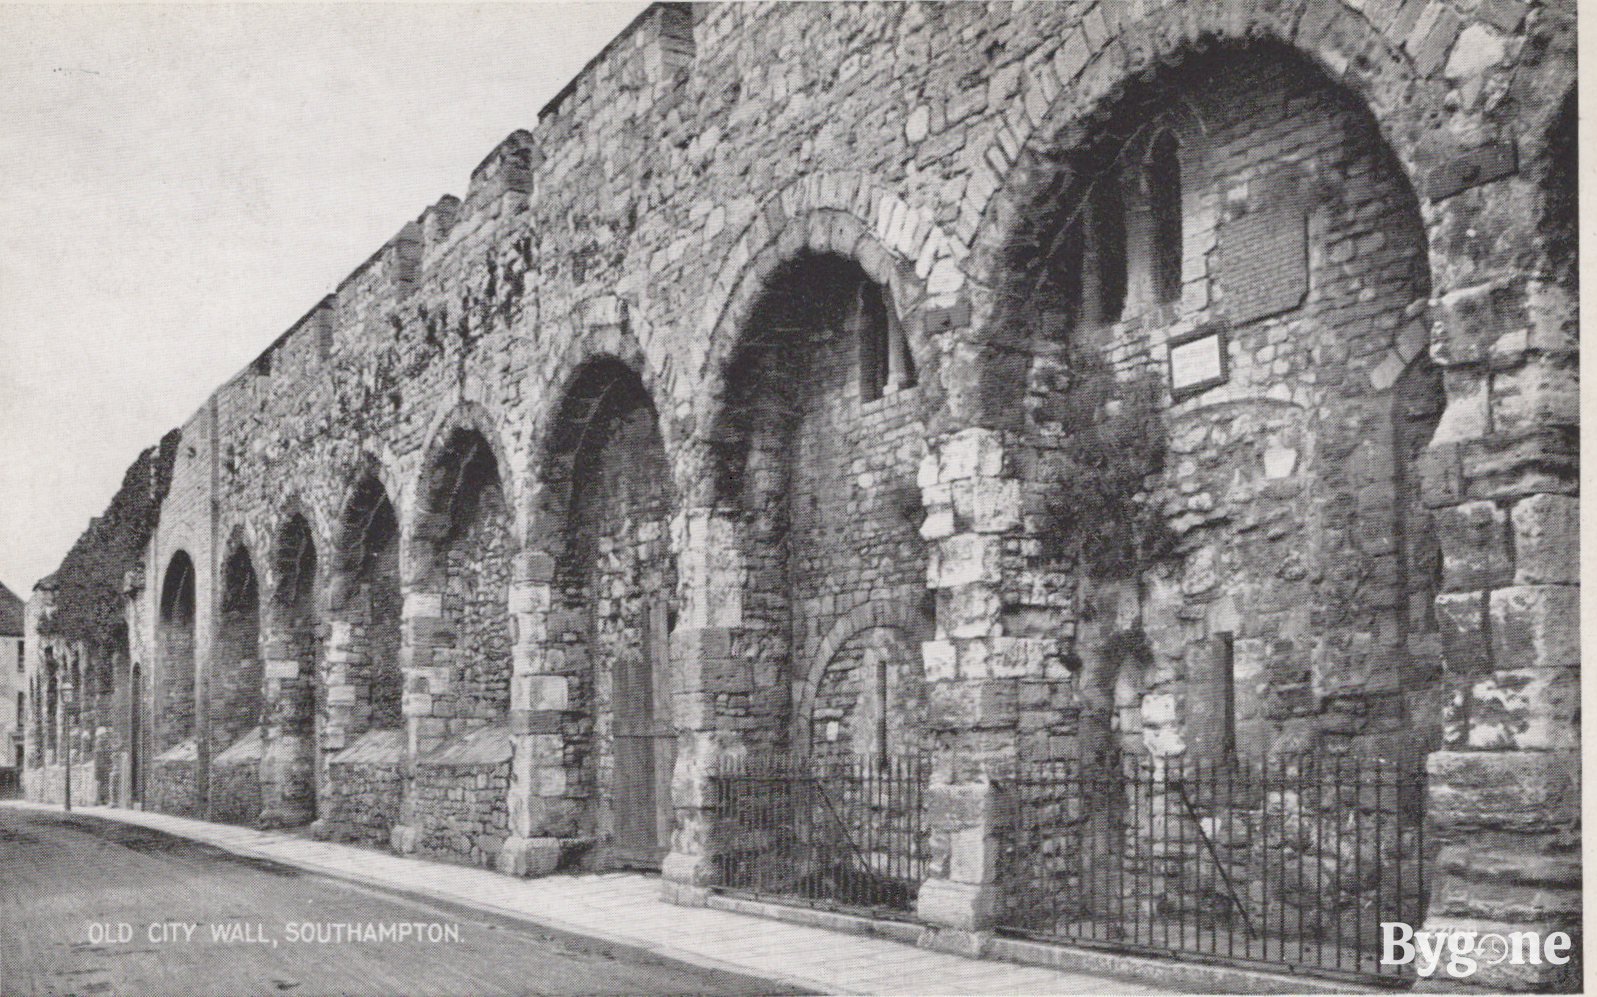 Old City Wall, Southampton